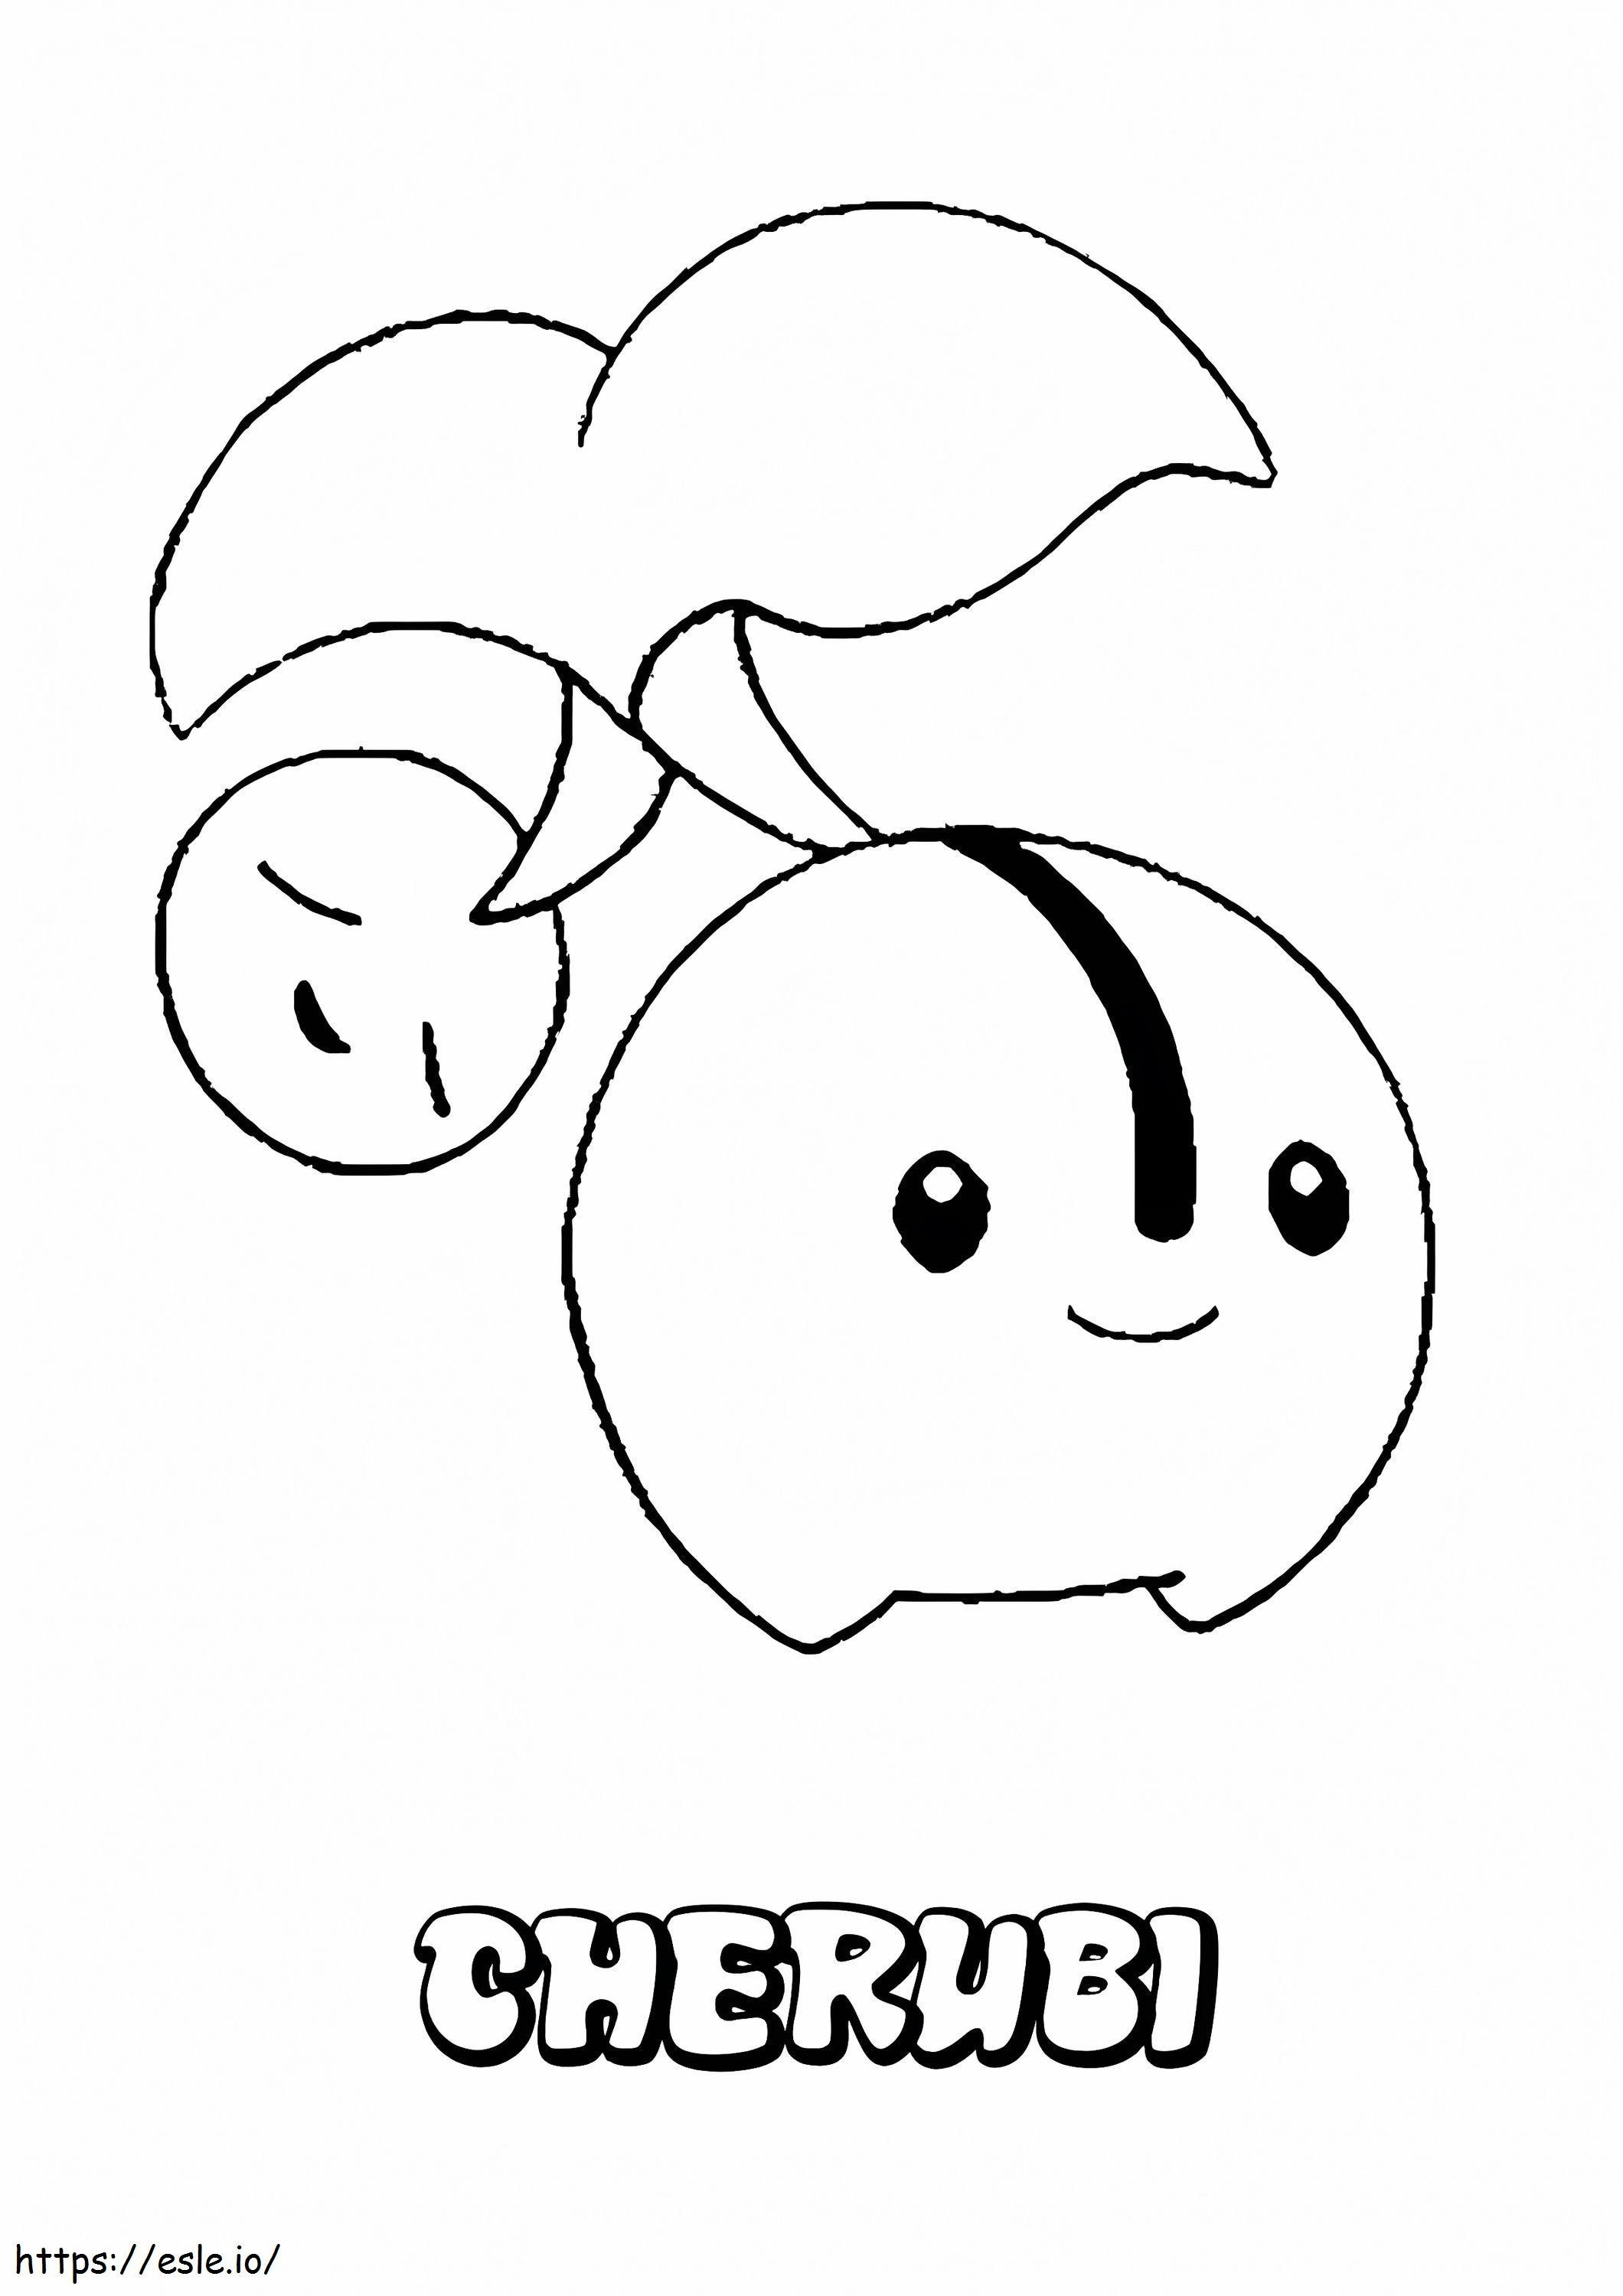 Cherubi-Pokémon ausmalbilder